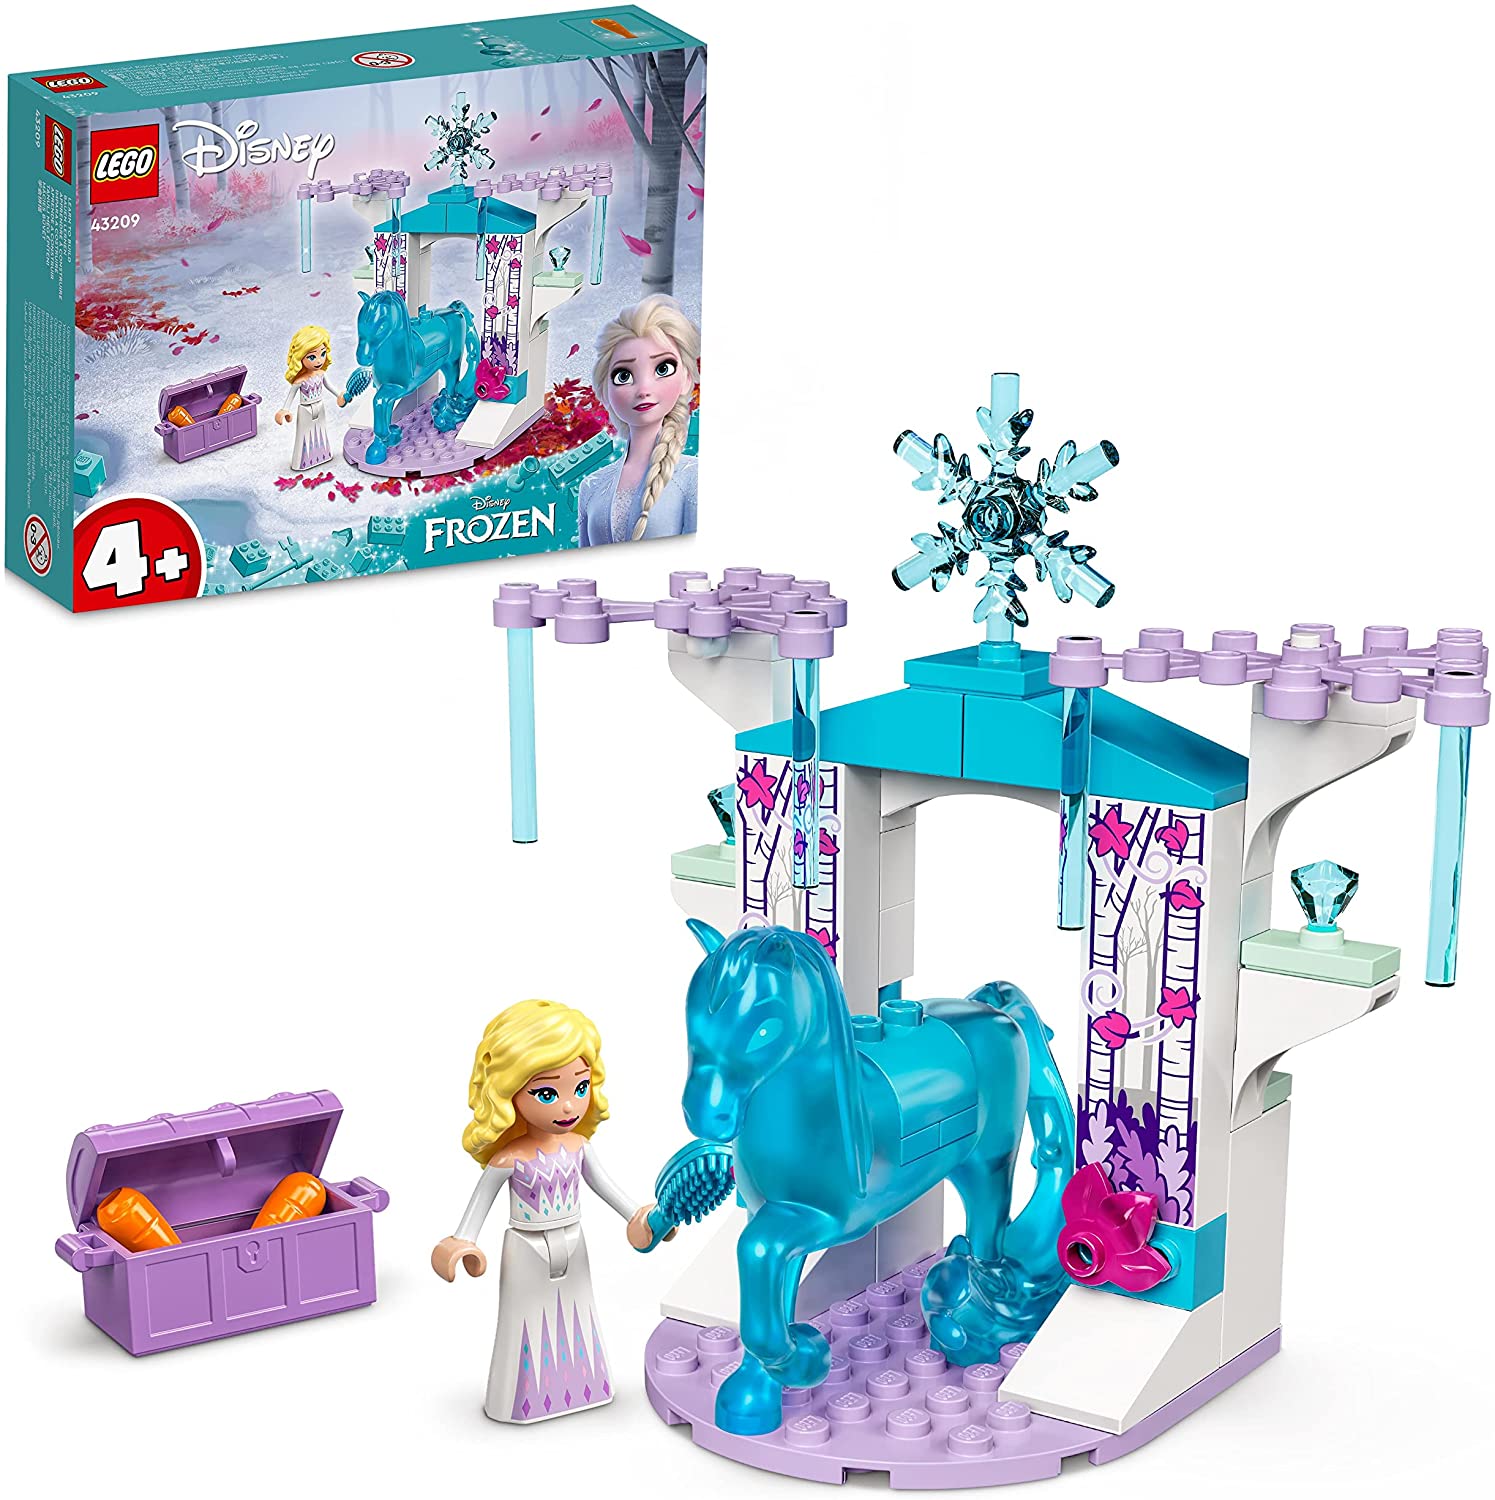 LEGO 43209 Disney Princess Elsa and Nokk Stable, Frozen, Toy with Elsa Mini